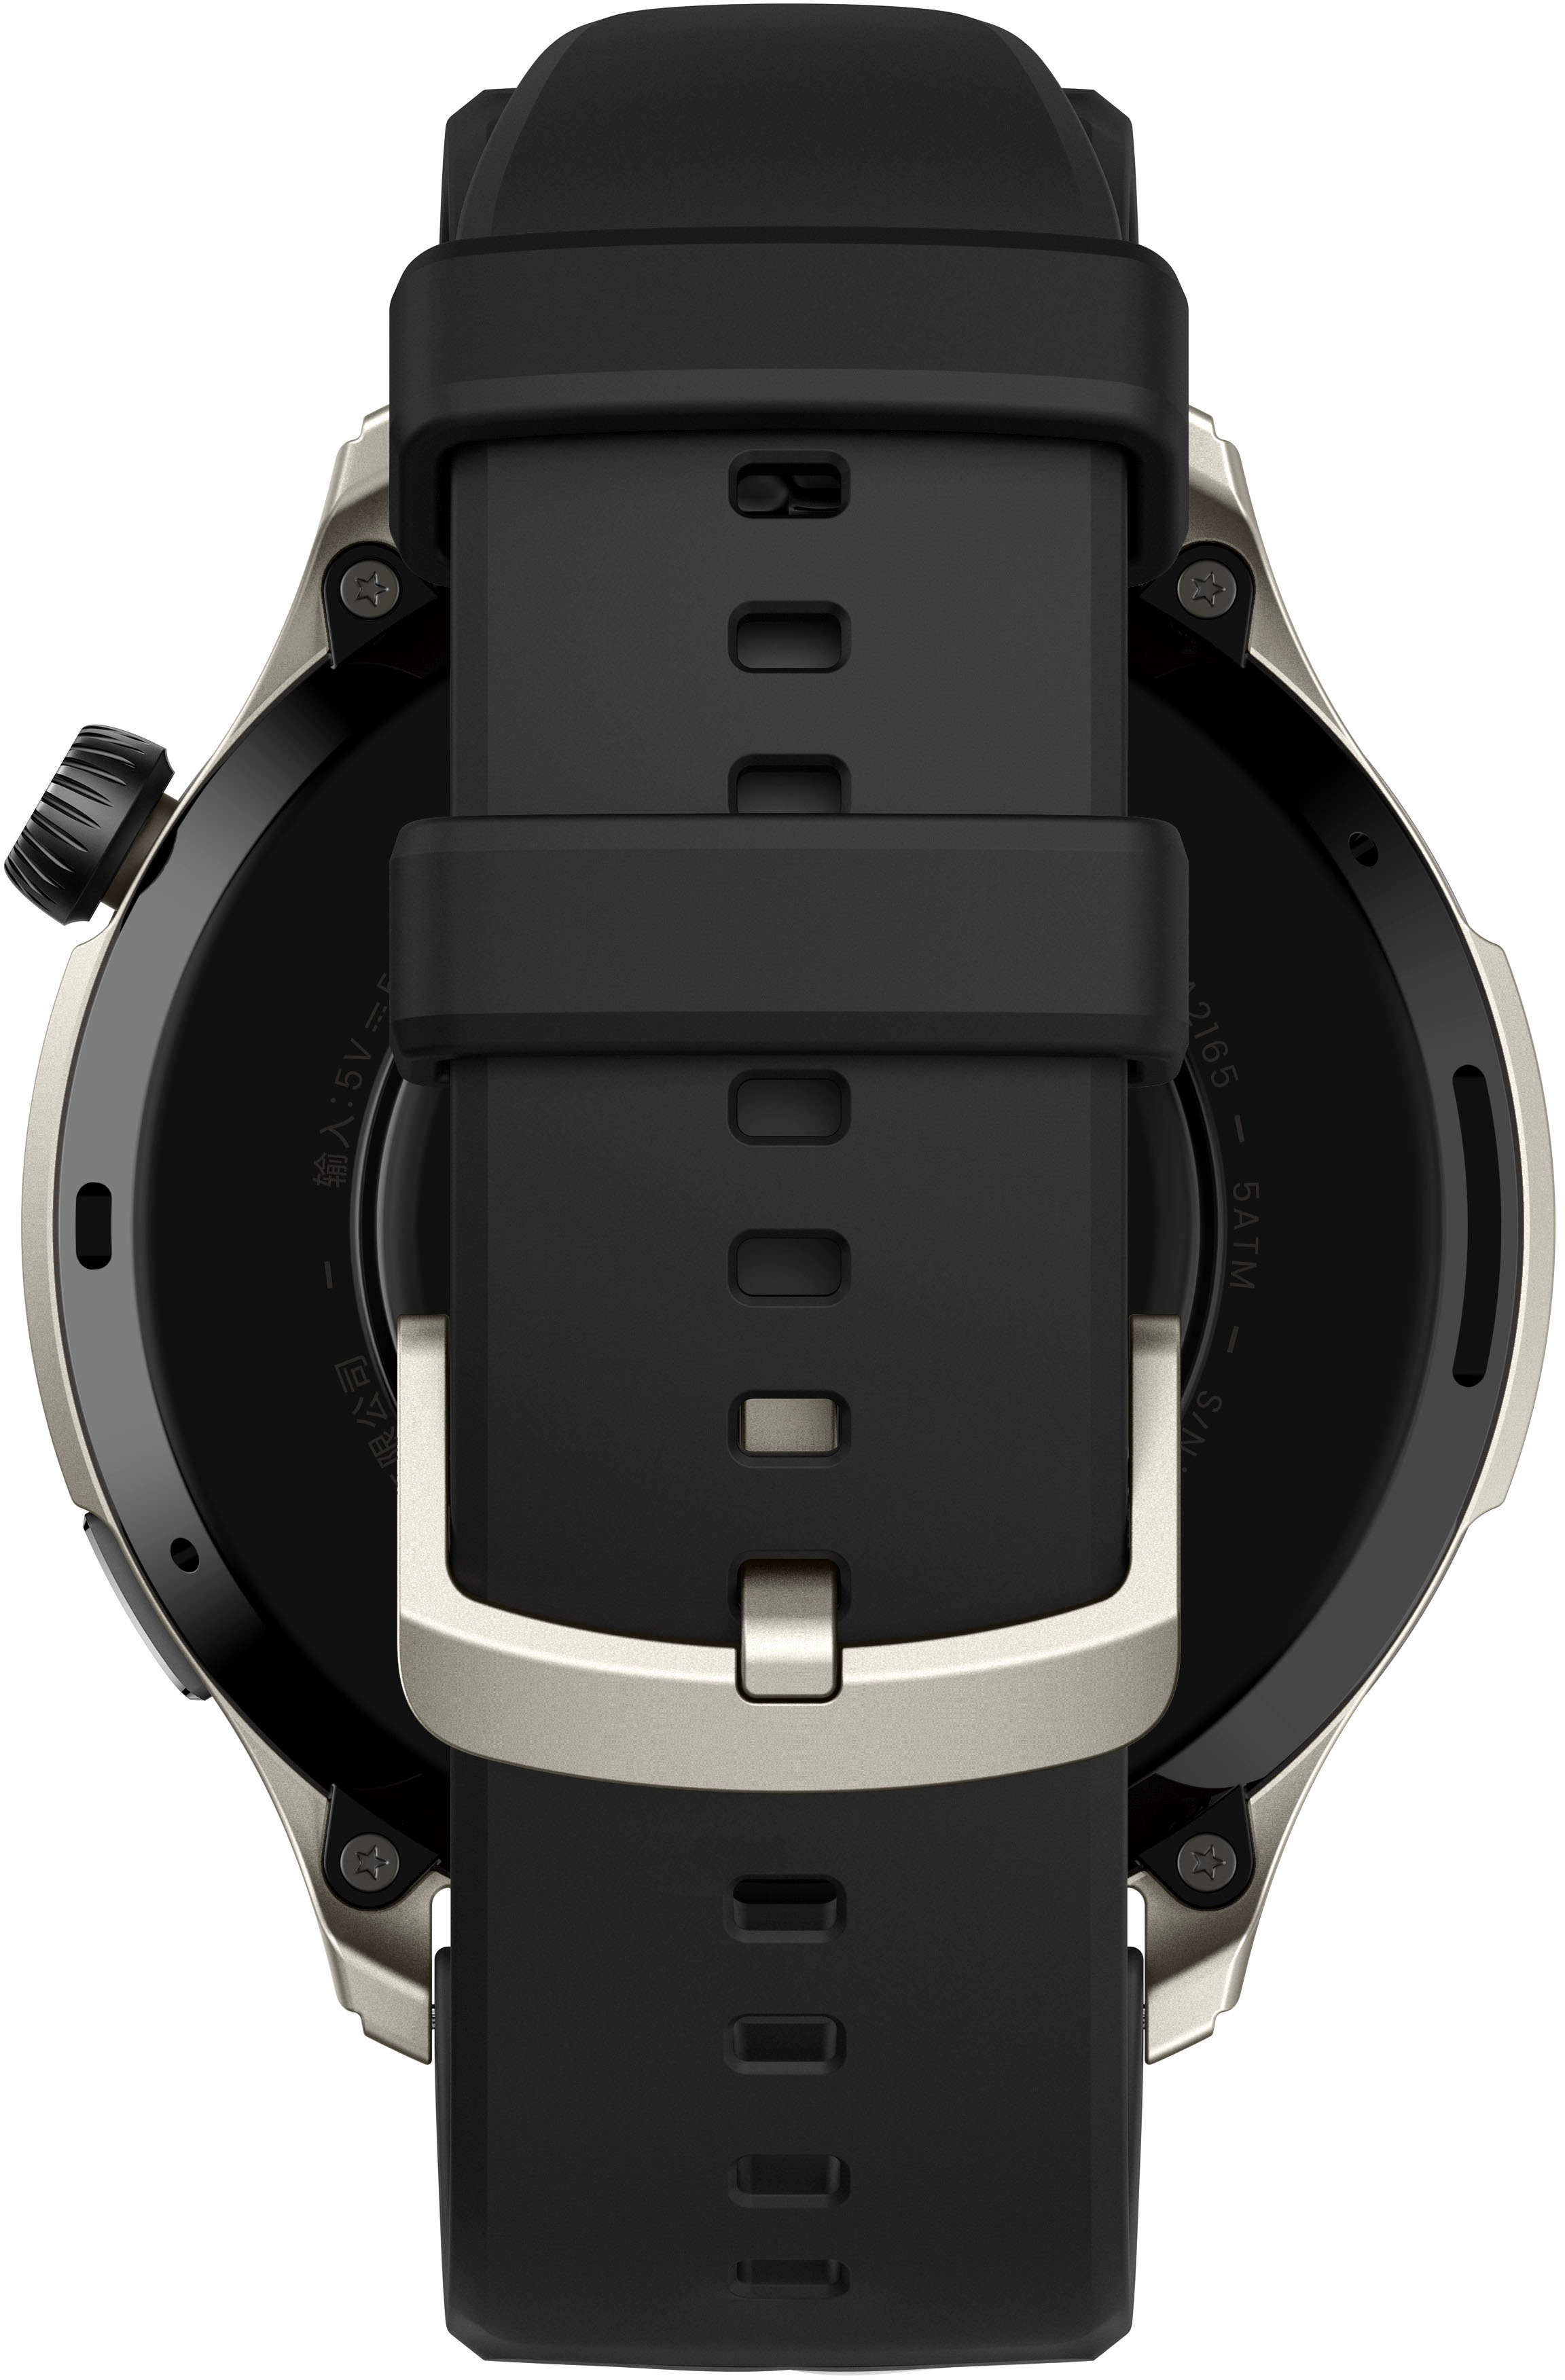 Amazfit GTR 4 Buisness & Sports Flagship Black Smartwatch